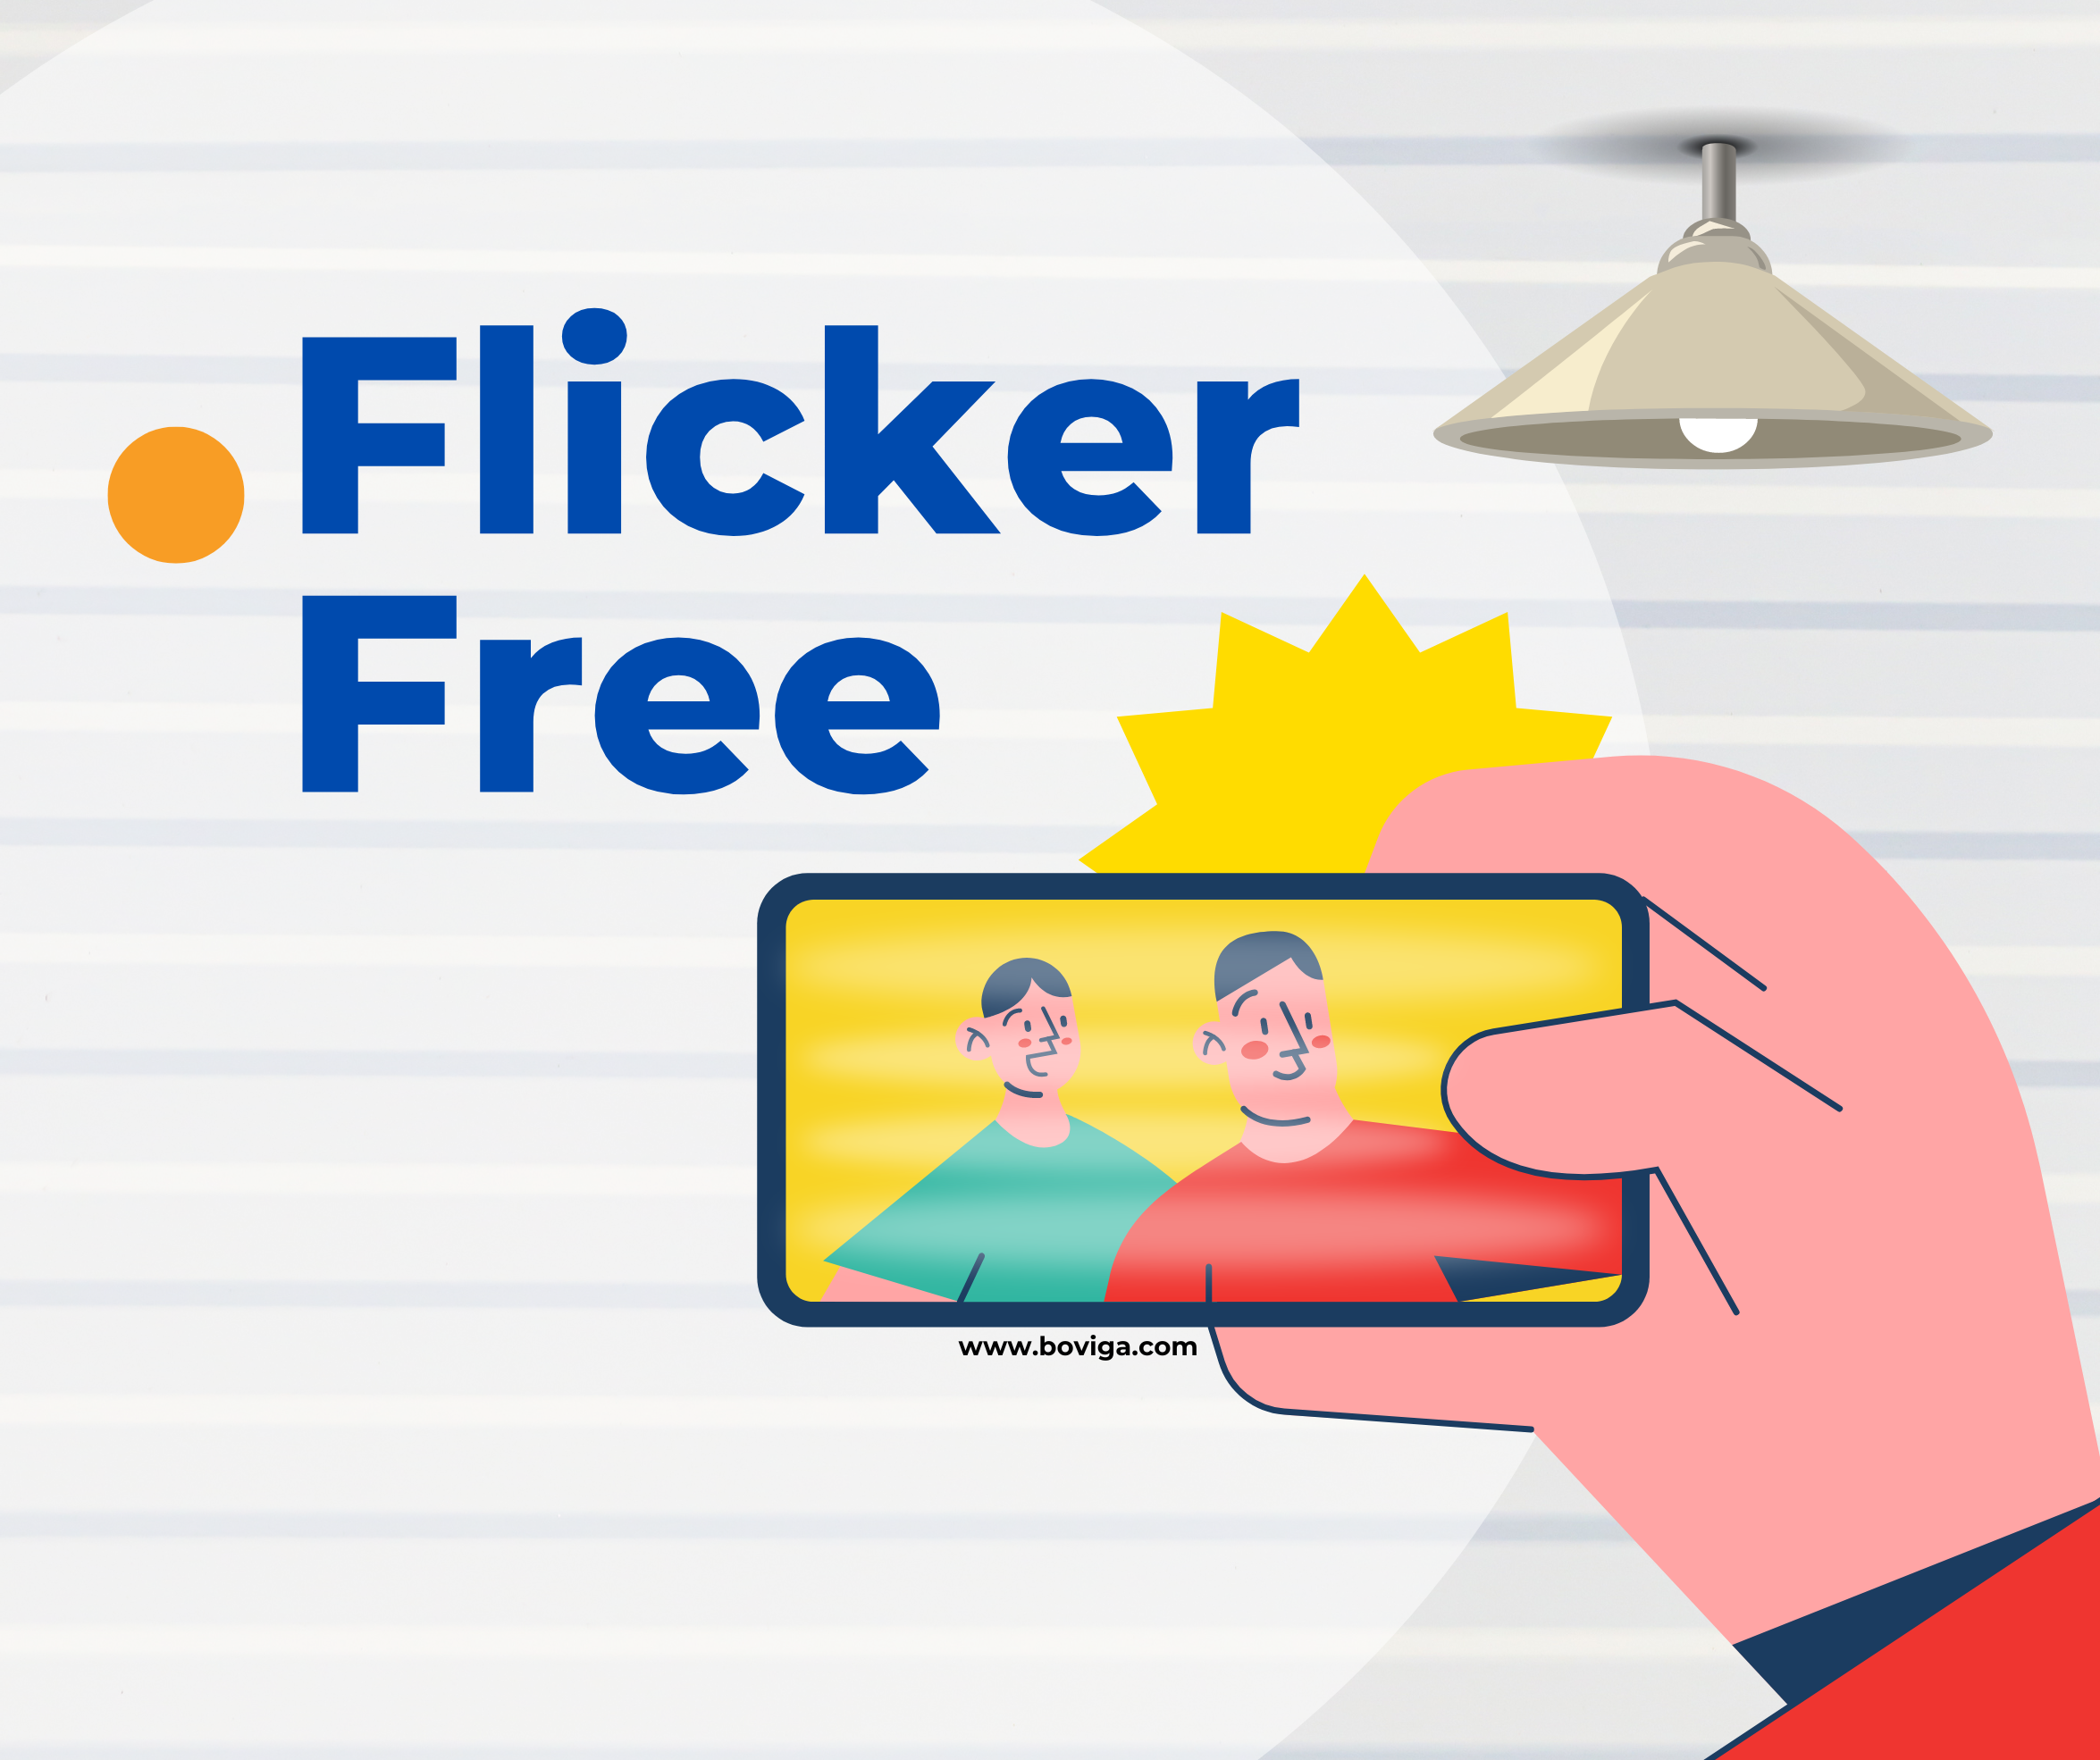 Flicker FREE ดีอย่างไร